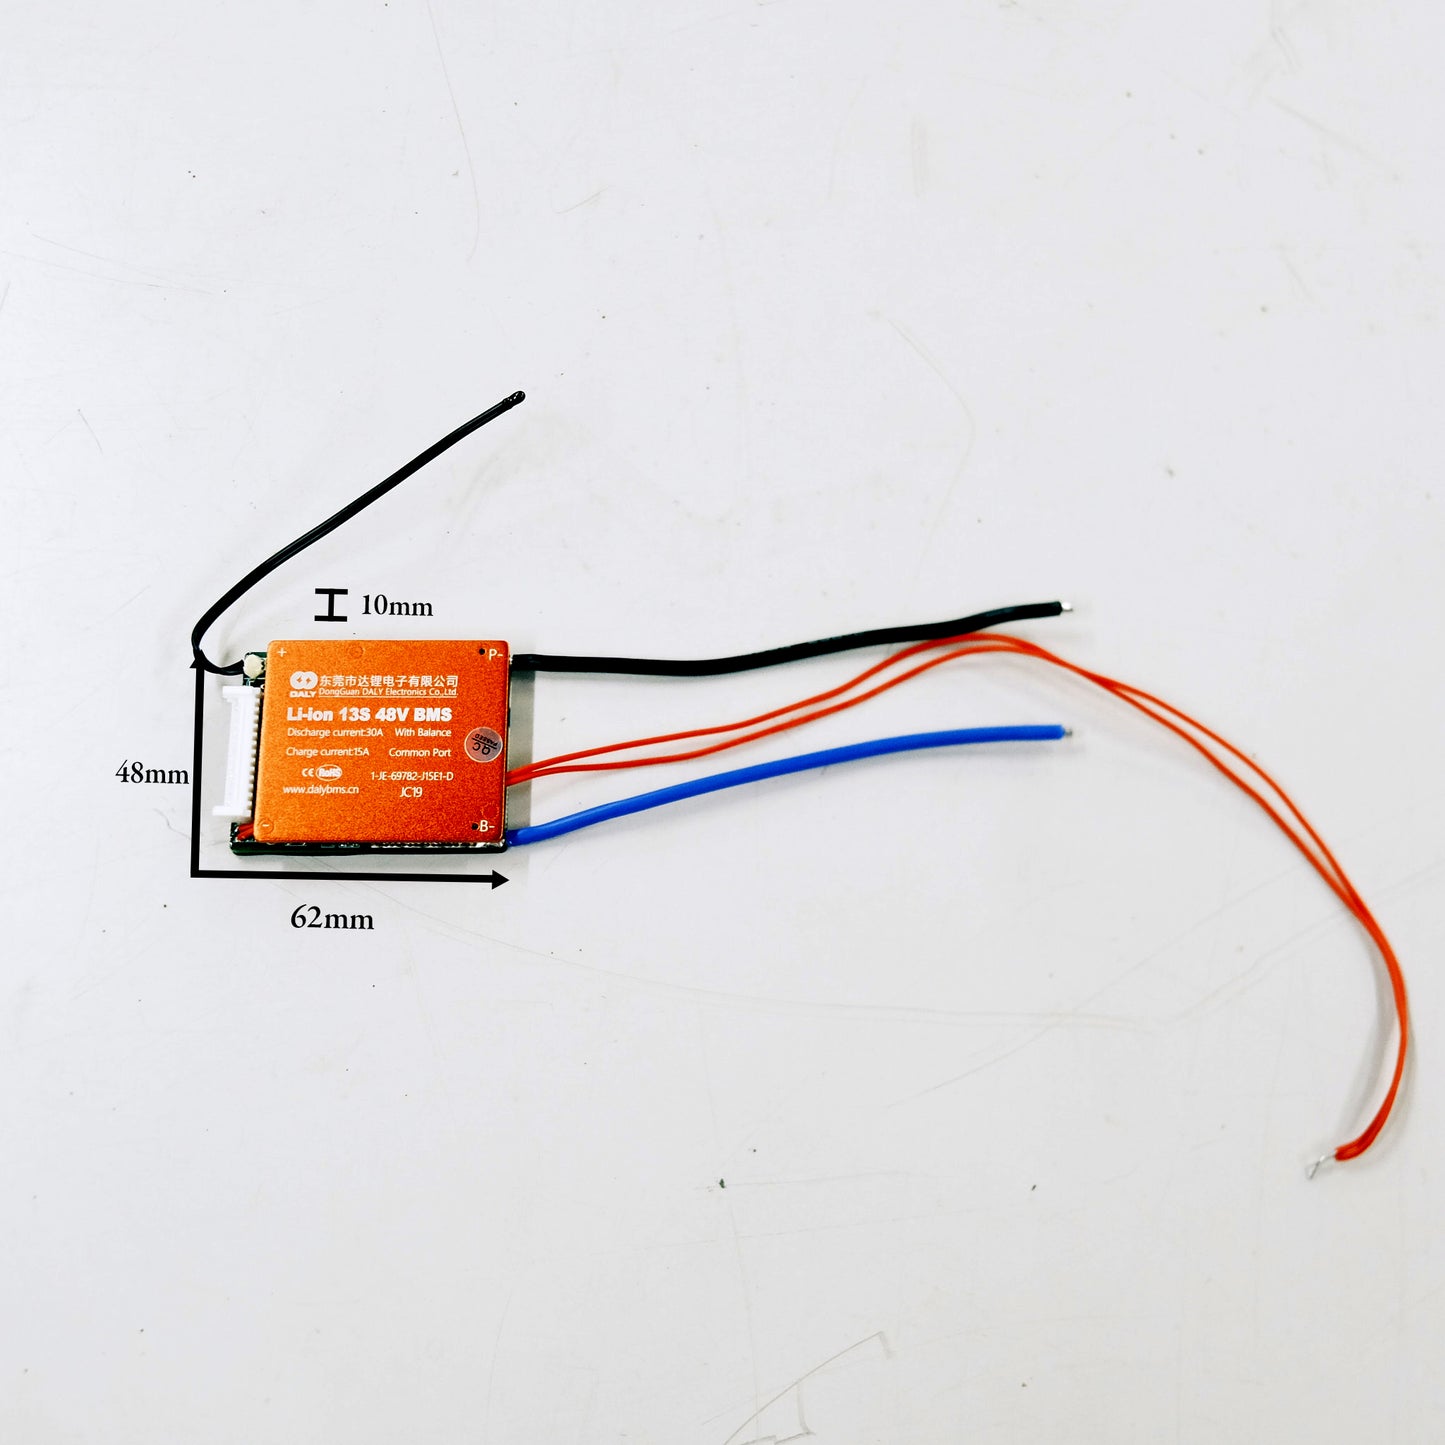 13S 30A Small Size DALY BMS - w Temp Probe + Switch Wires